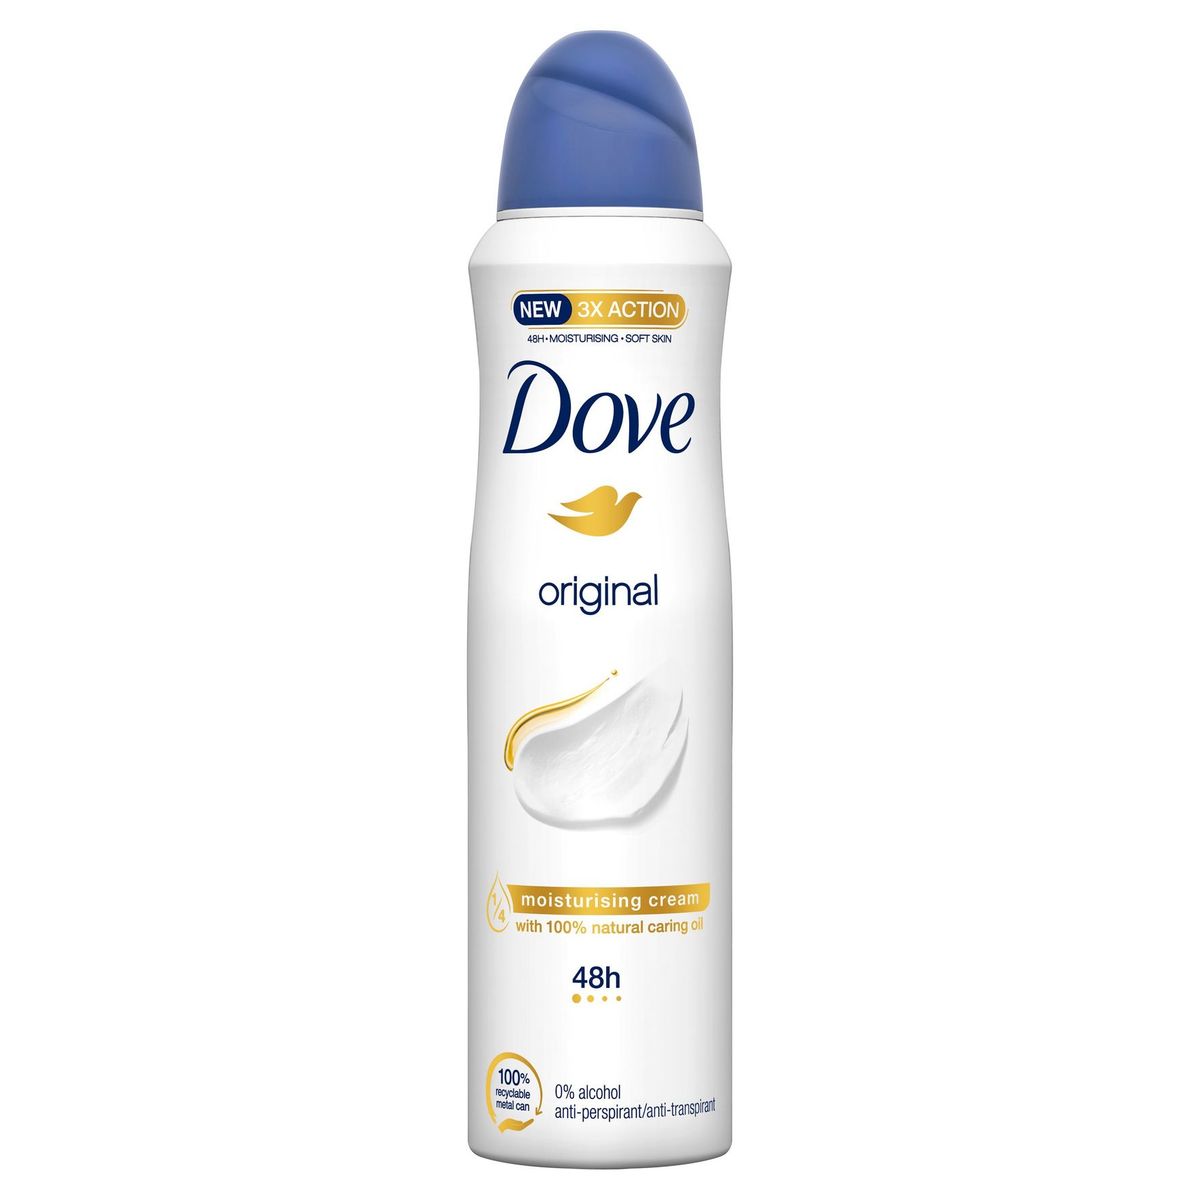 Dove Deodorant Anti-Transpirant Spray Original 150 ml